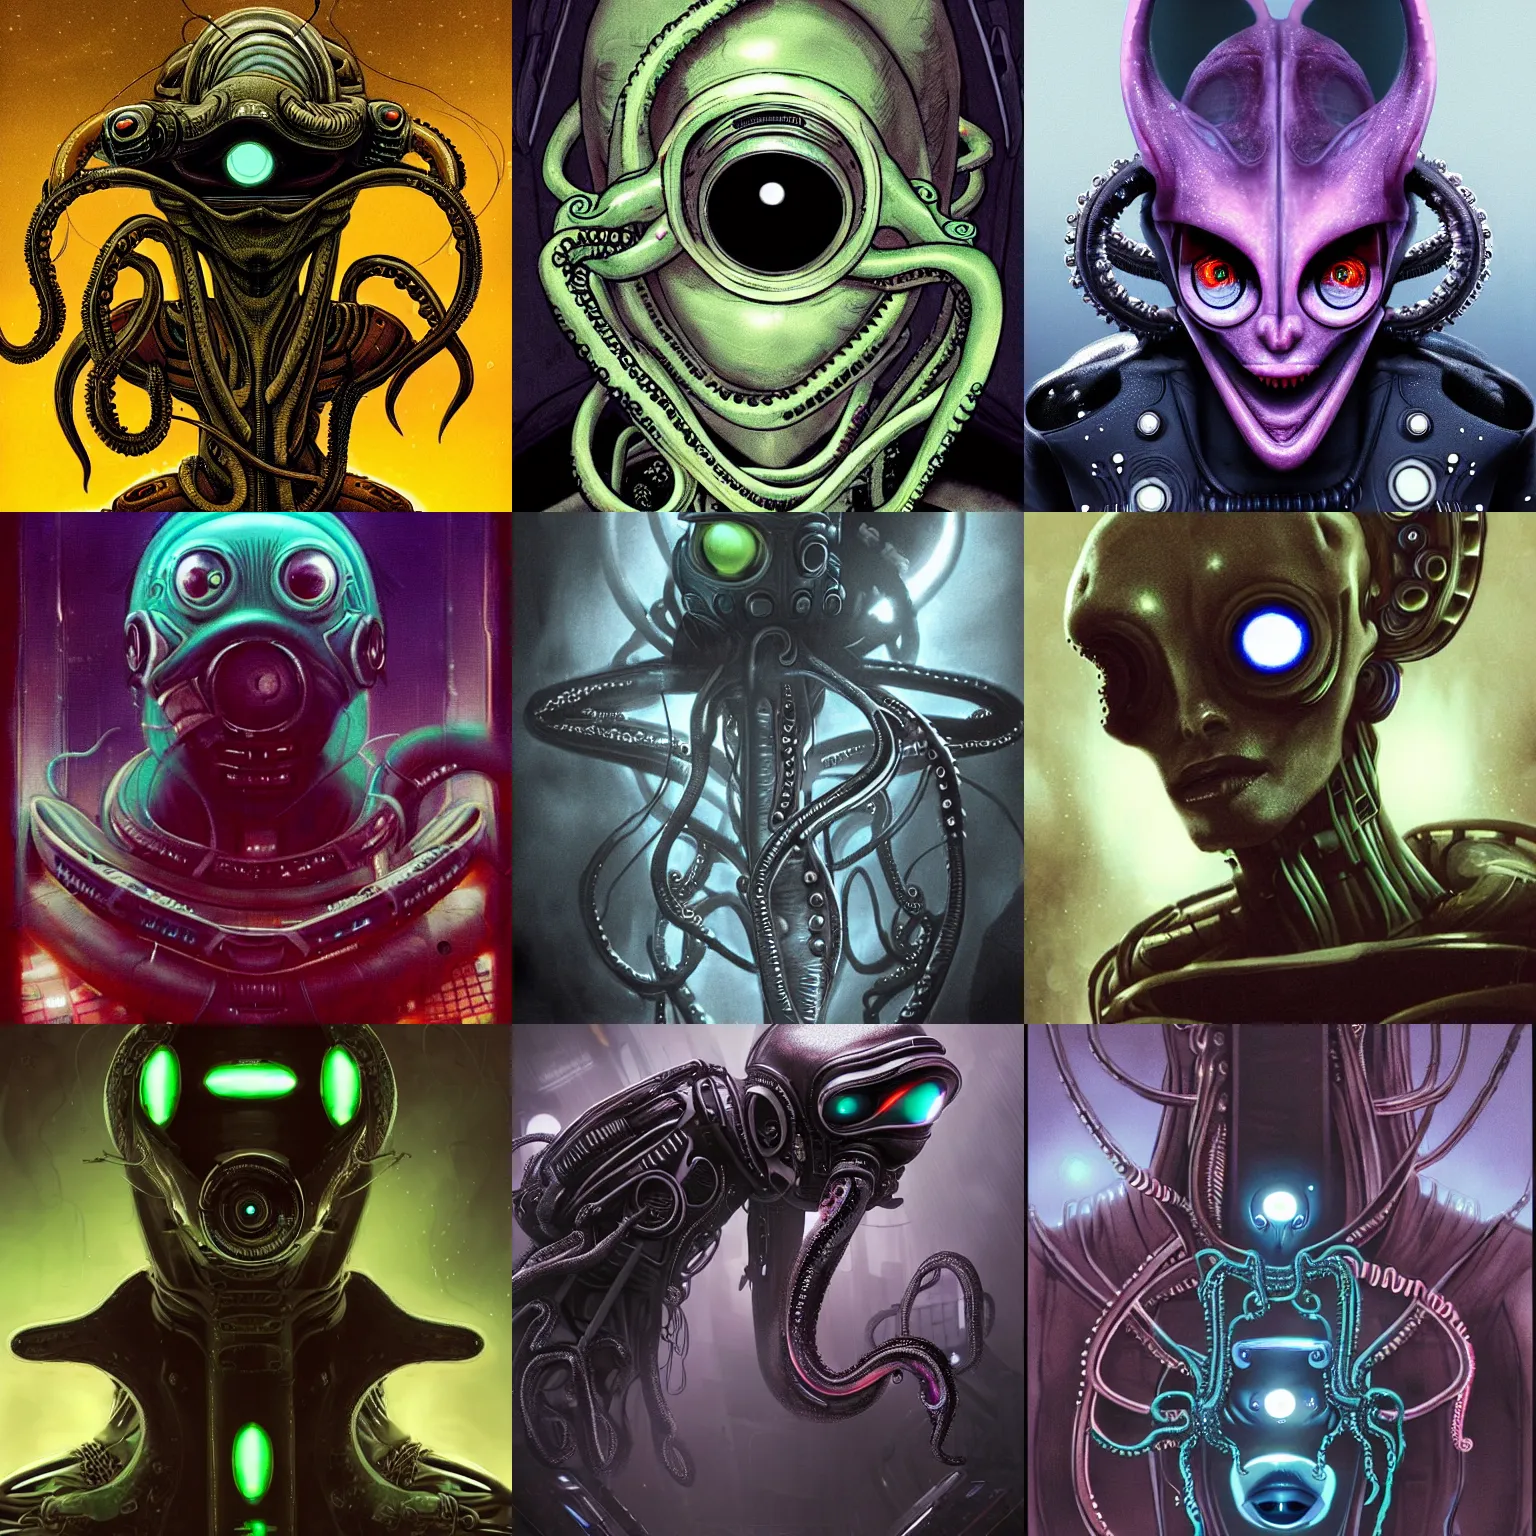 Prompt: 3 eyed alien creature with tentacles, cyberpunk, dystopian, robotic, blade runner